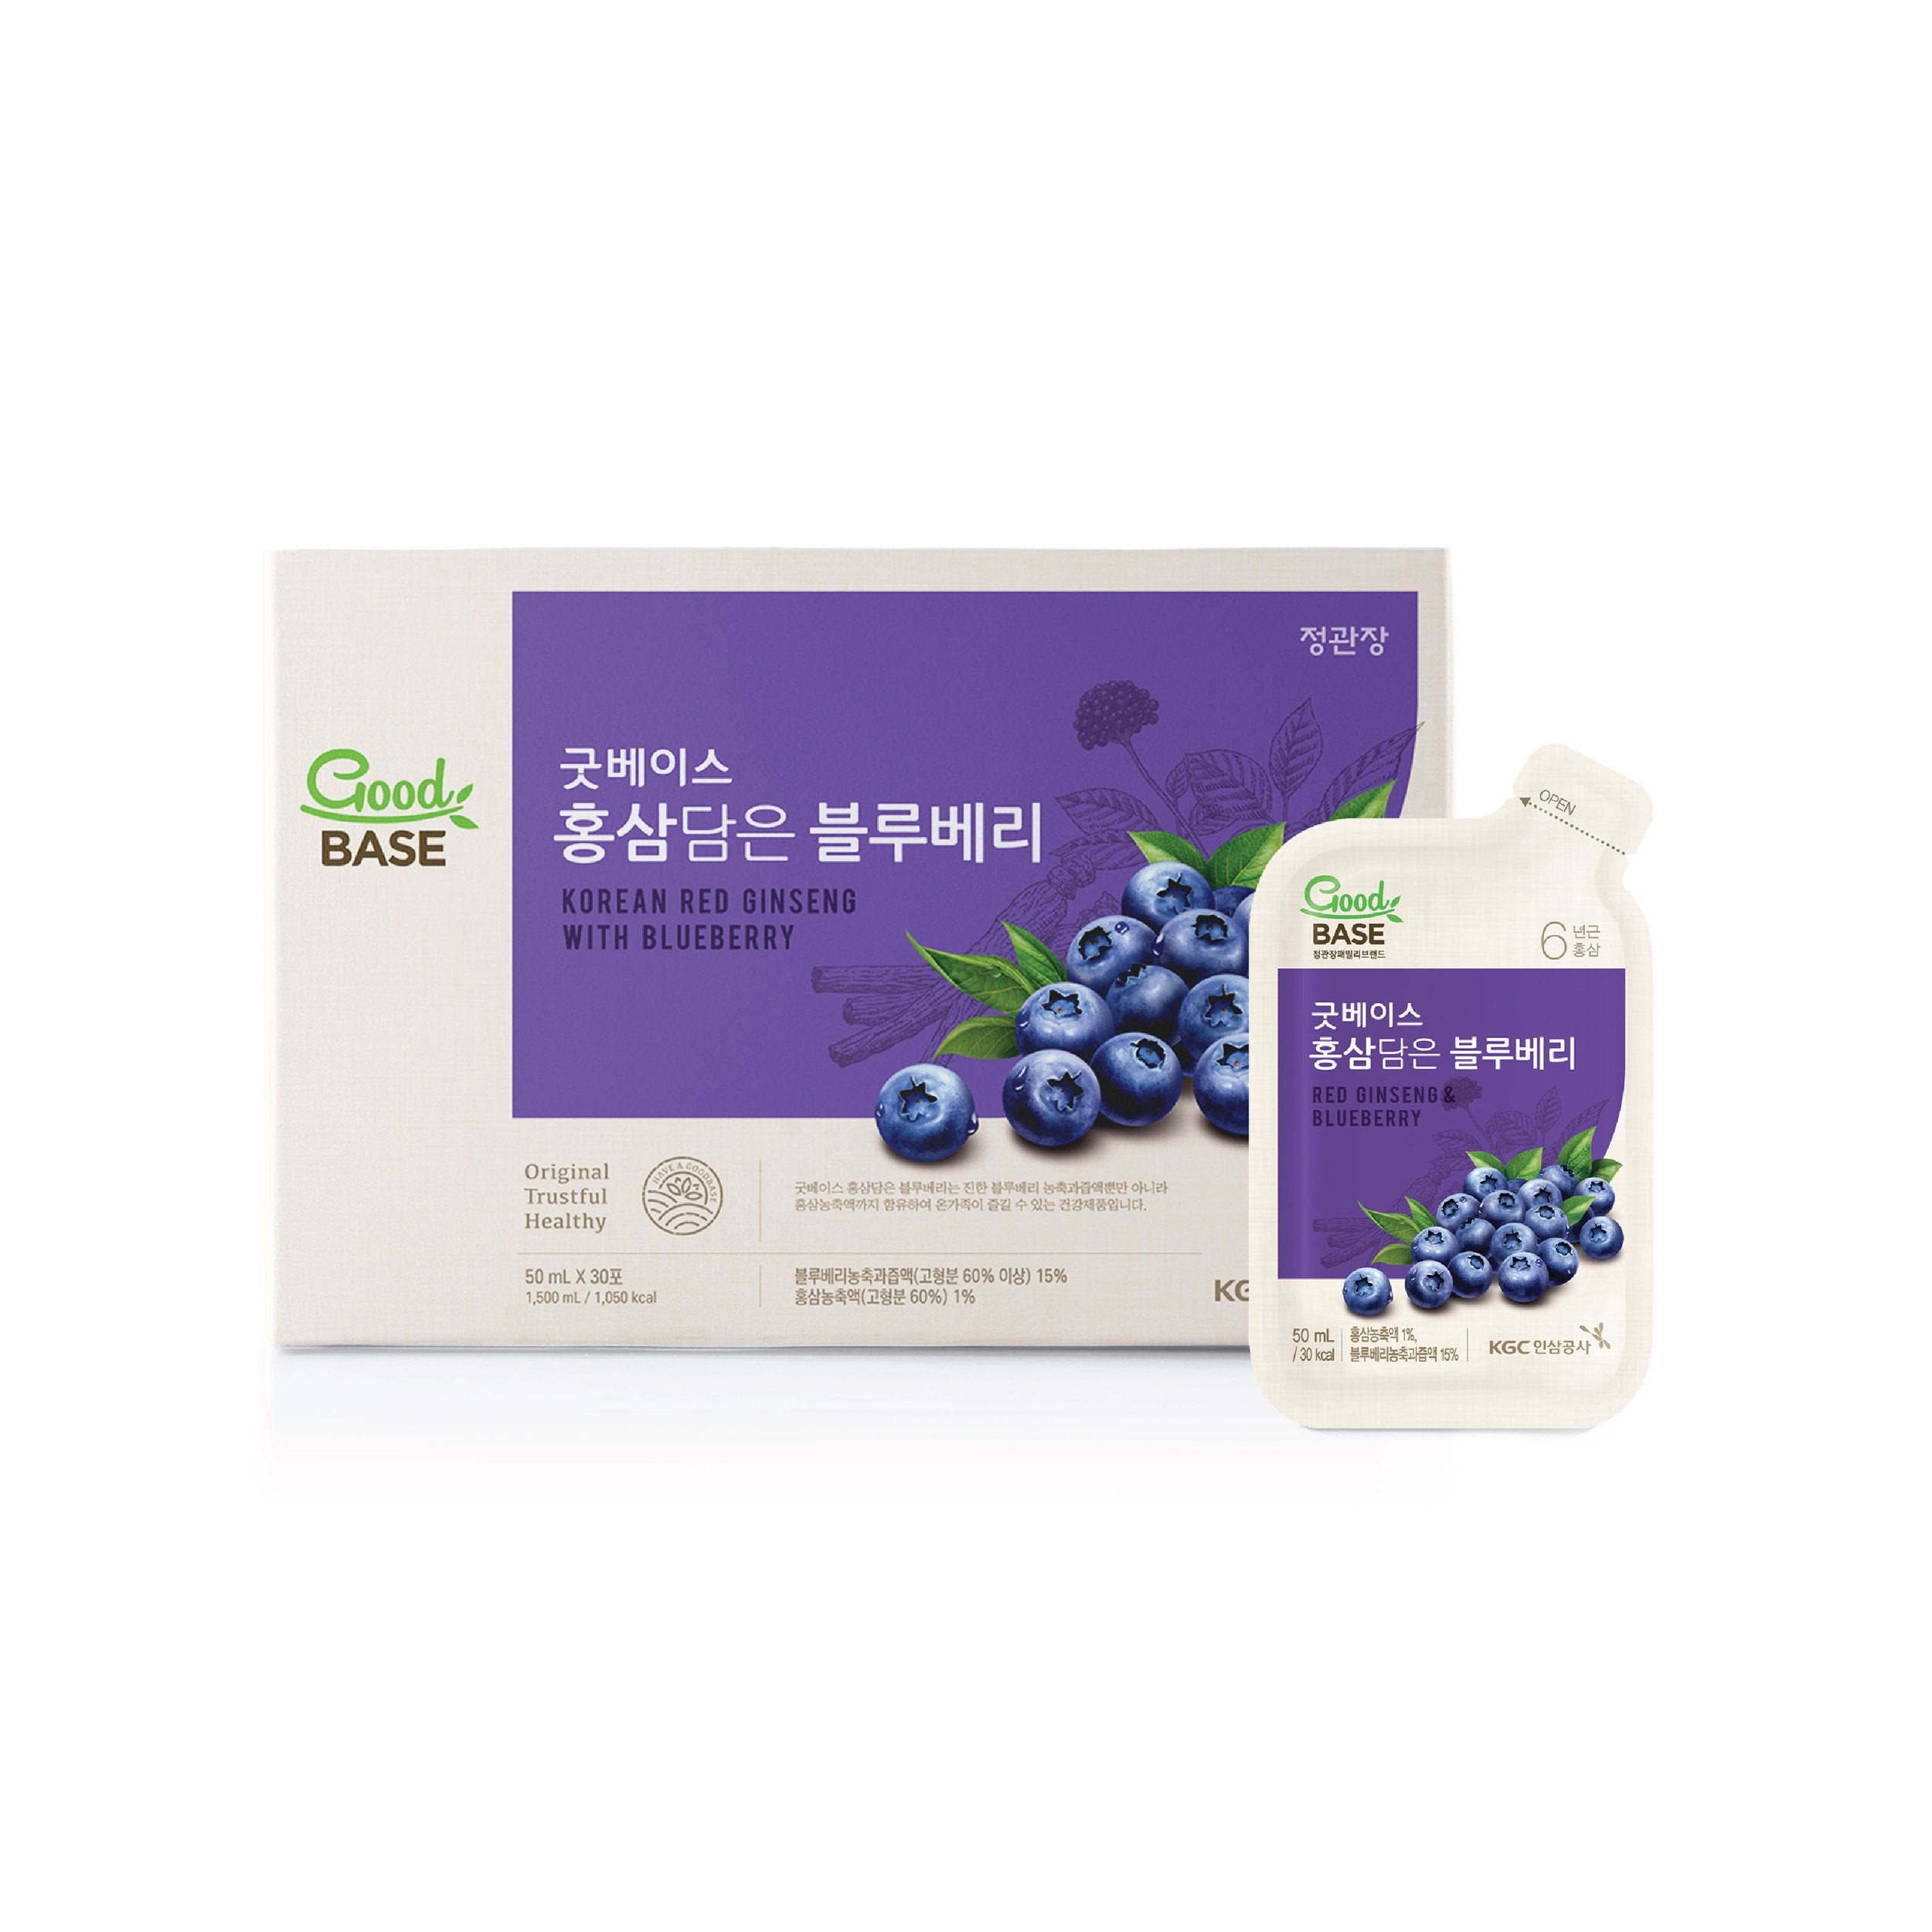 Good Base Red Ginseng & Blueberry - Uma mistura poderosa